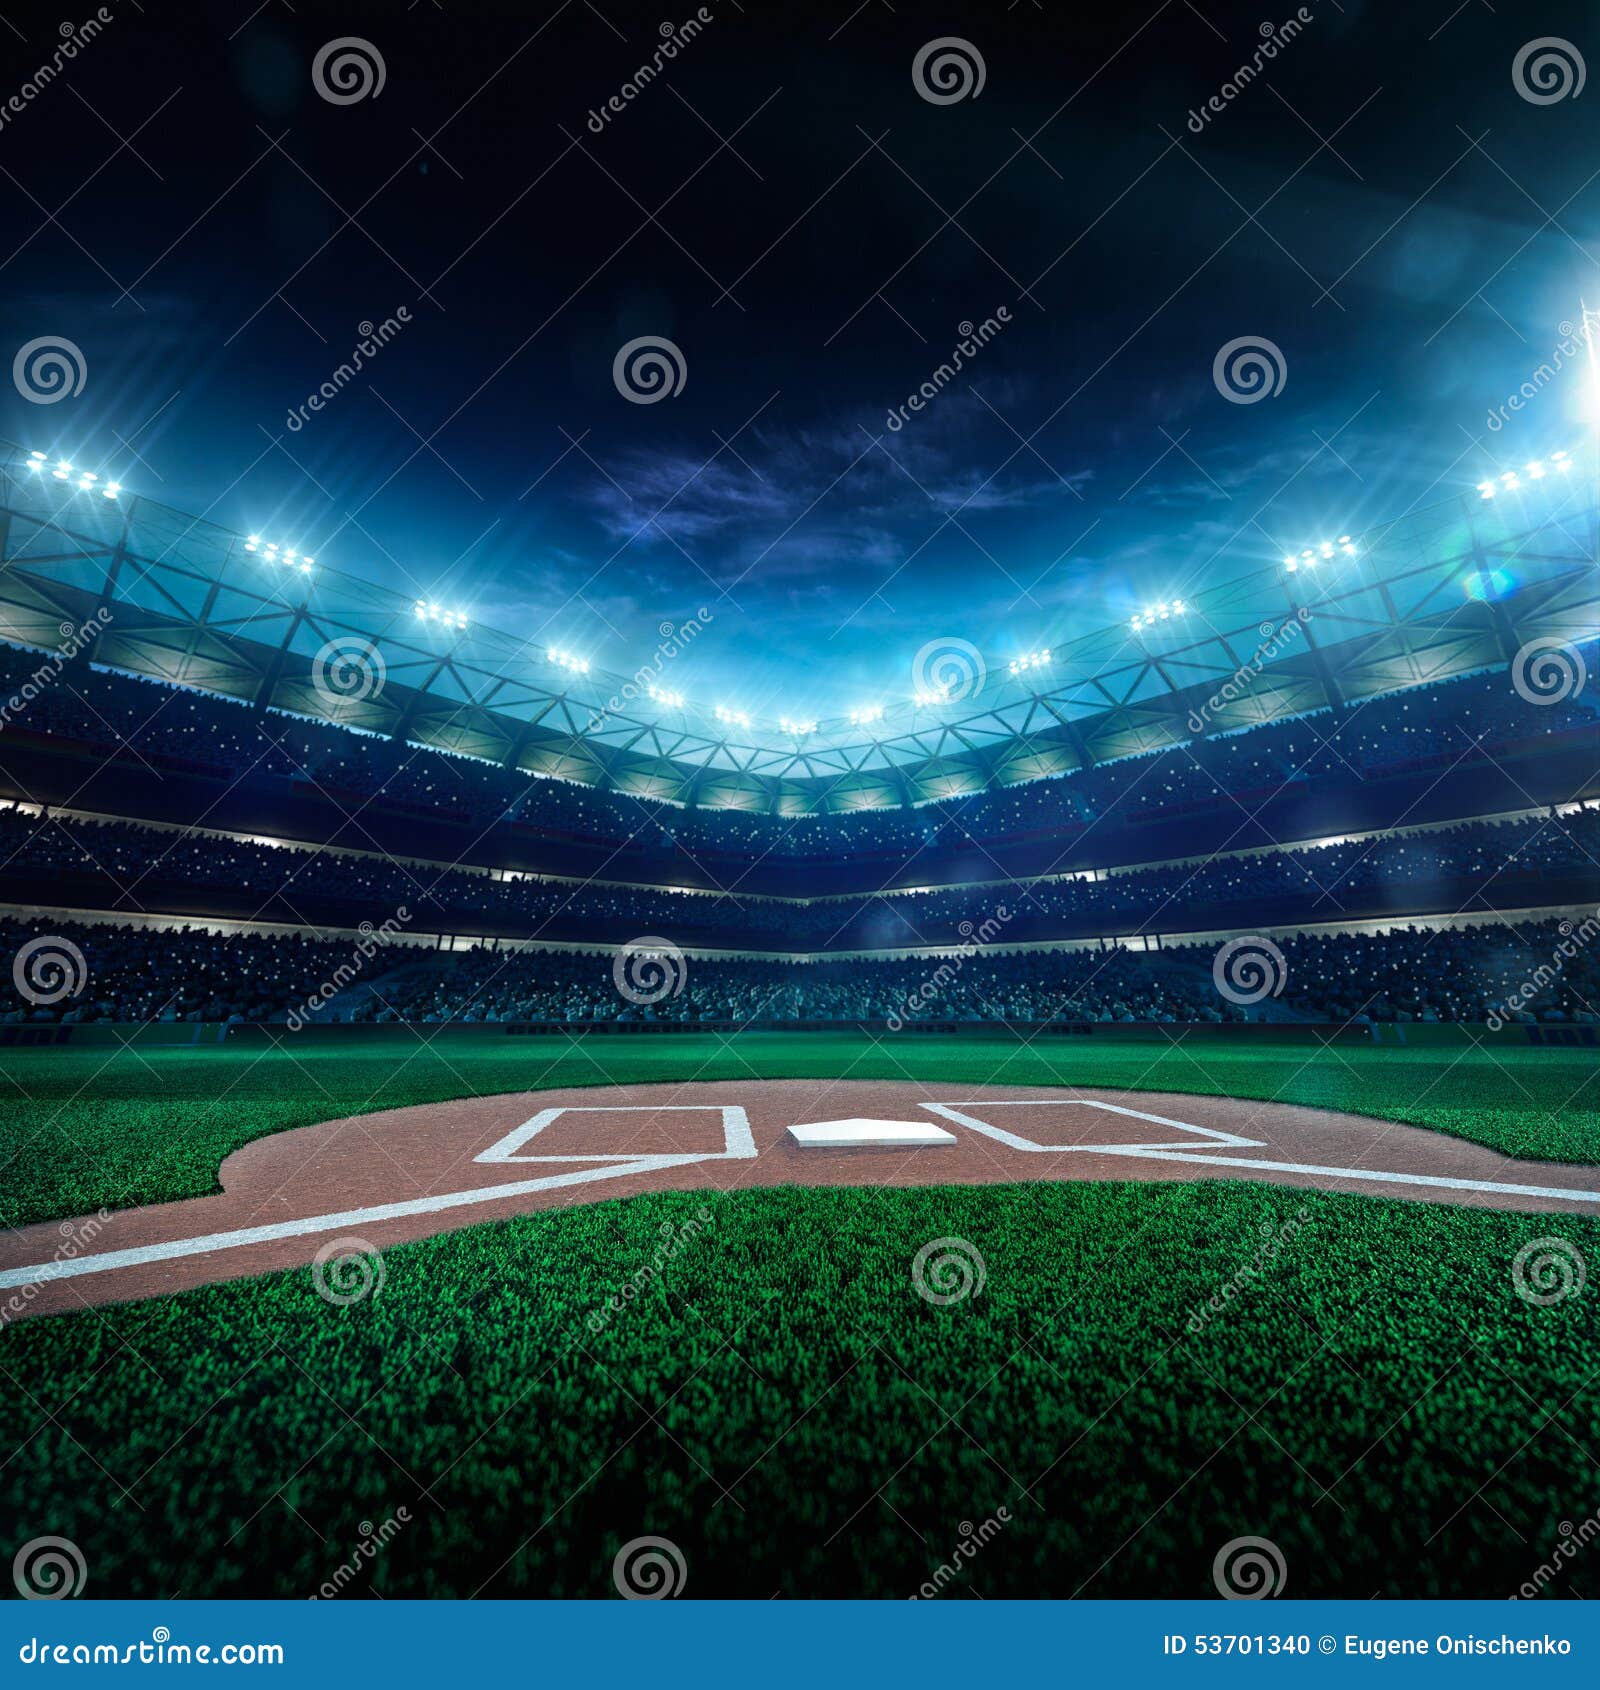 professional baseball grand arena in night